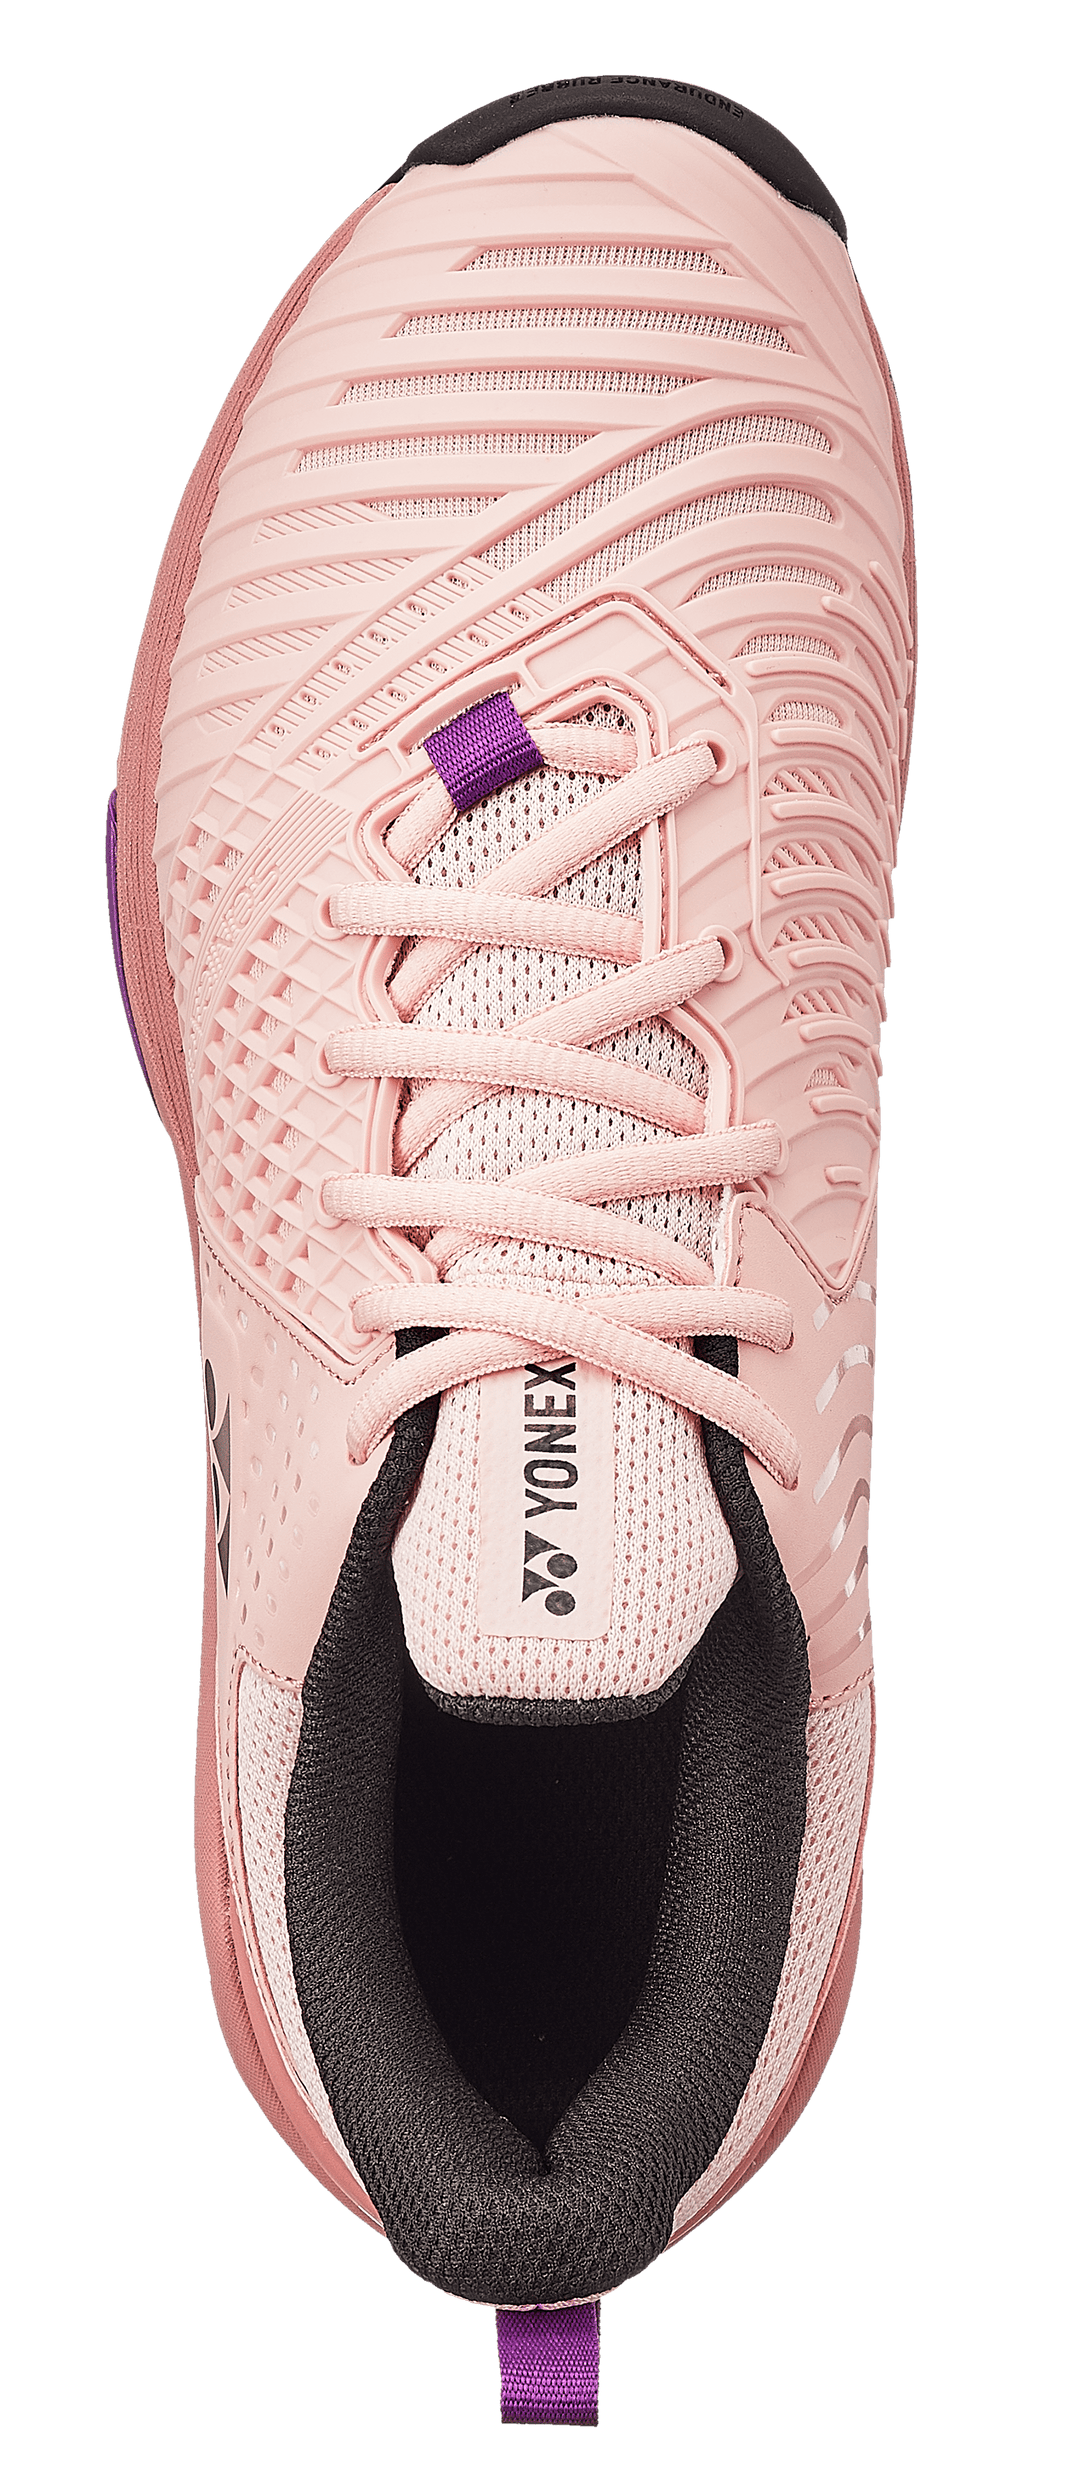 Yonex Power Cushion Sonicage 3 Women's Tennis All Court Shoe Pink-Beige Women's Tennis Shoes Yonex 